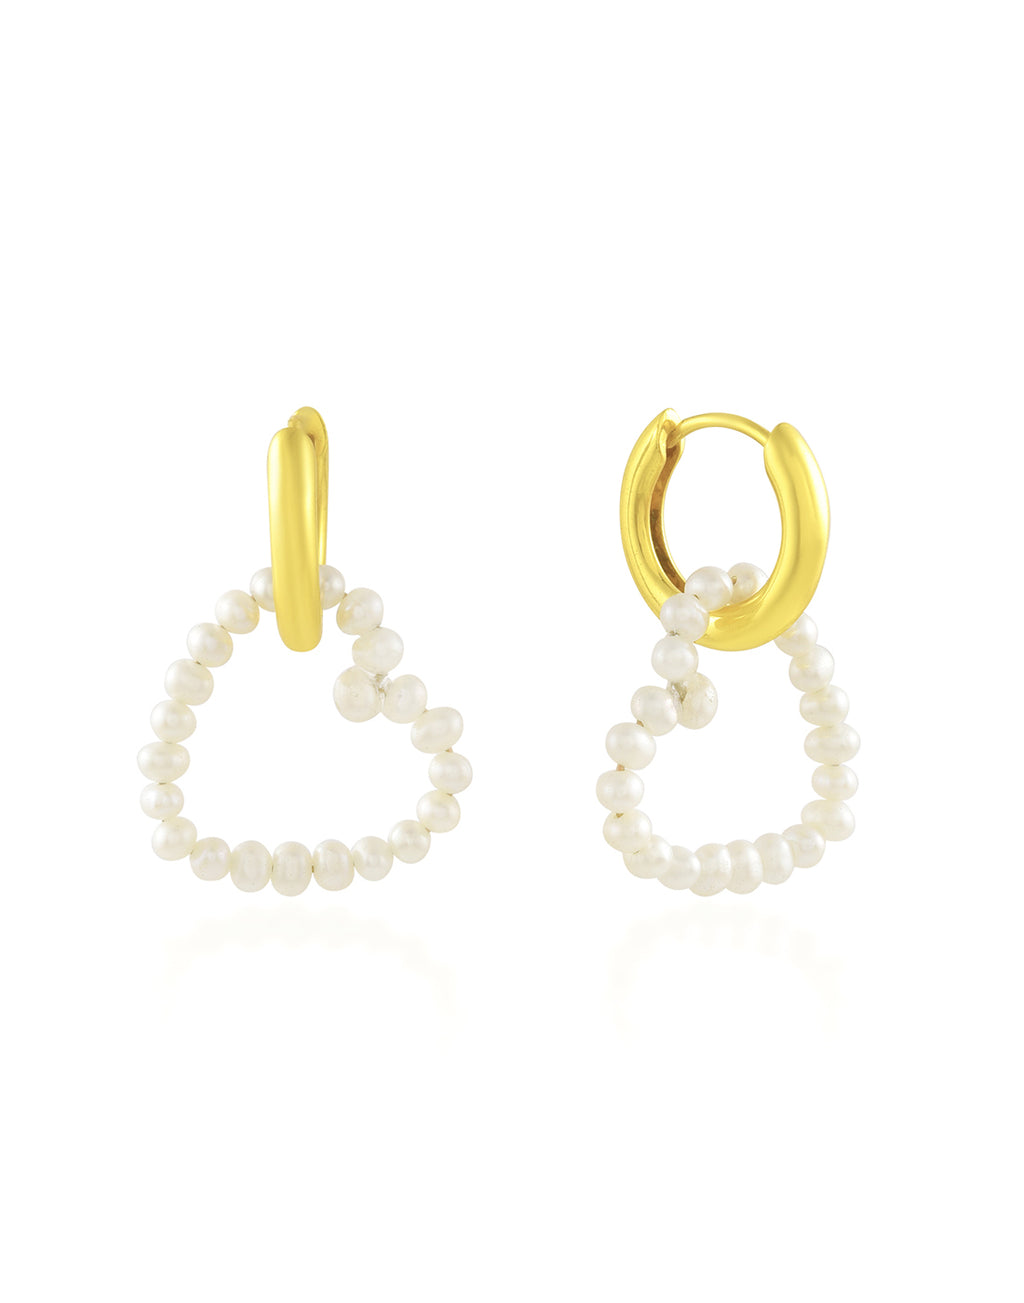 Beaded Heart Huggies - Statement Earrings - Gold-Plated & Hypoallergenic Jewellery - Made in India - Dubai Jewellery - Dori